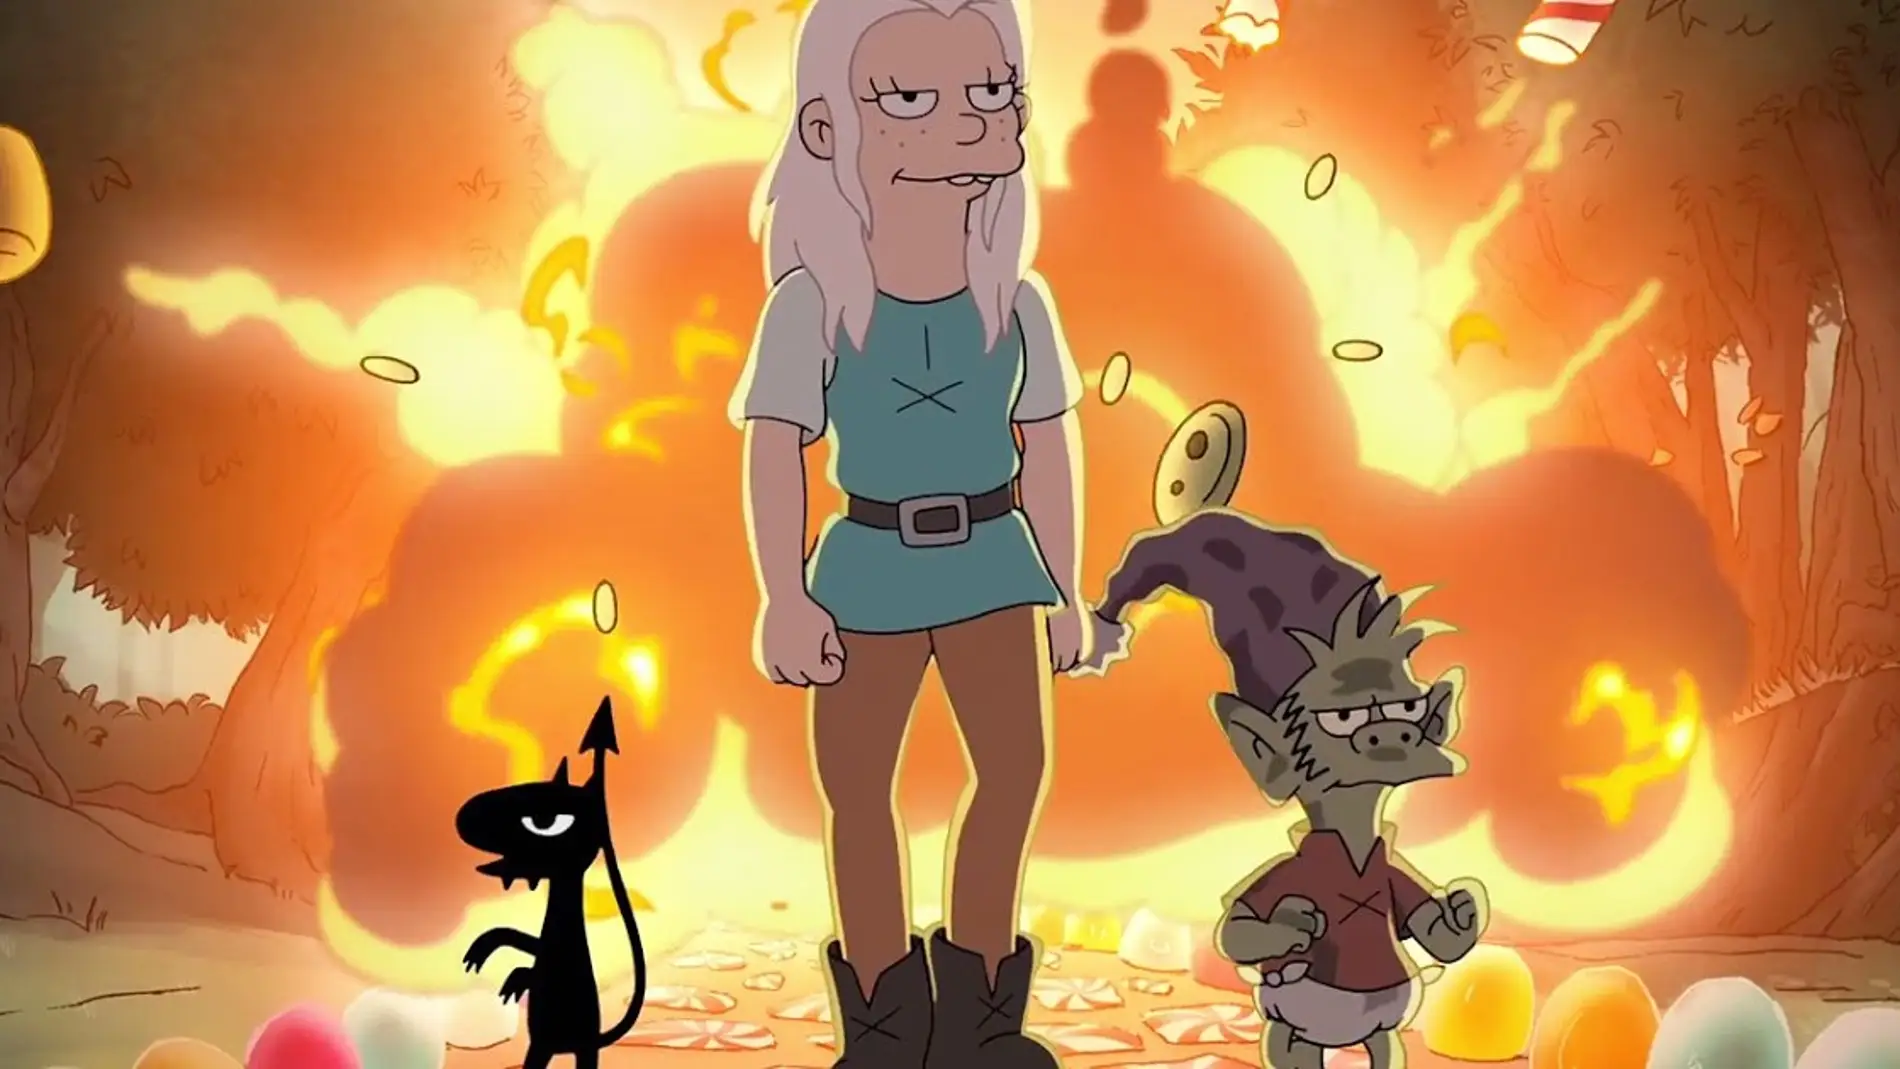  Bean, la princesa de Matt Groening en (Des)encanto